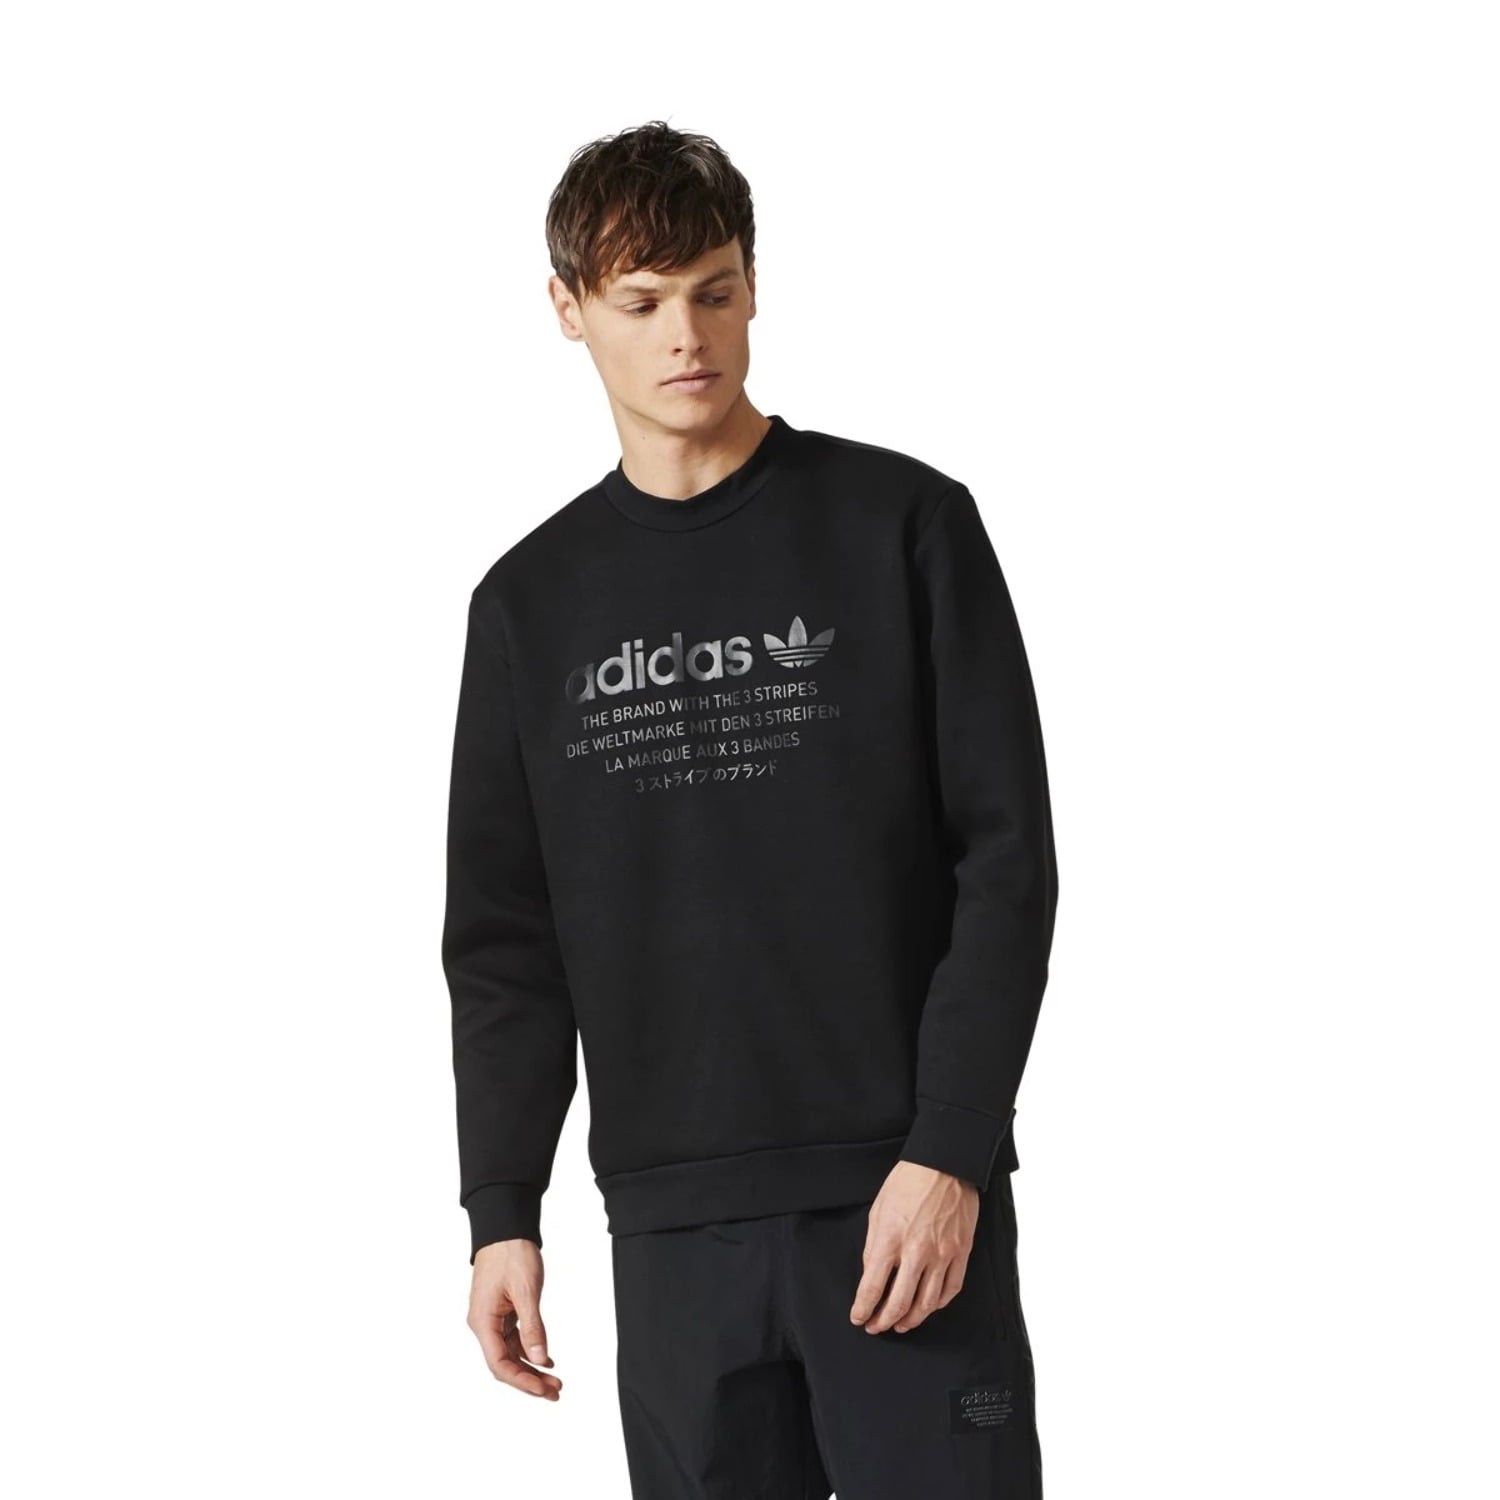 adidas Originals Men's Nmd Crew Sweatshirt Black Large Walmart.com